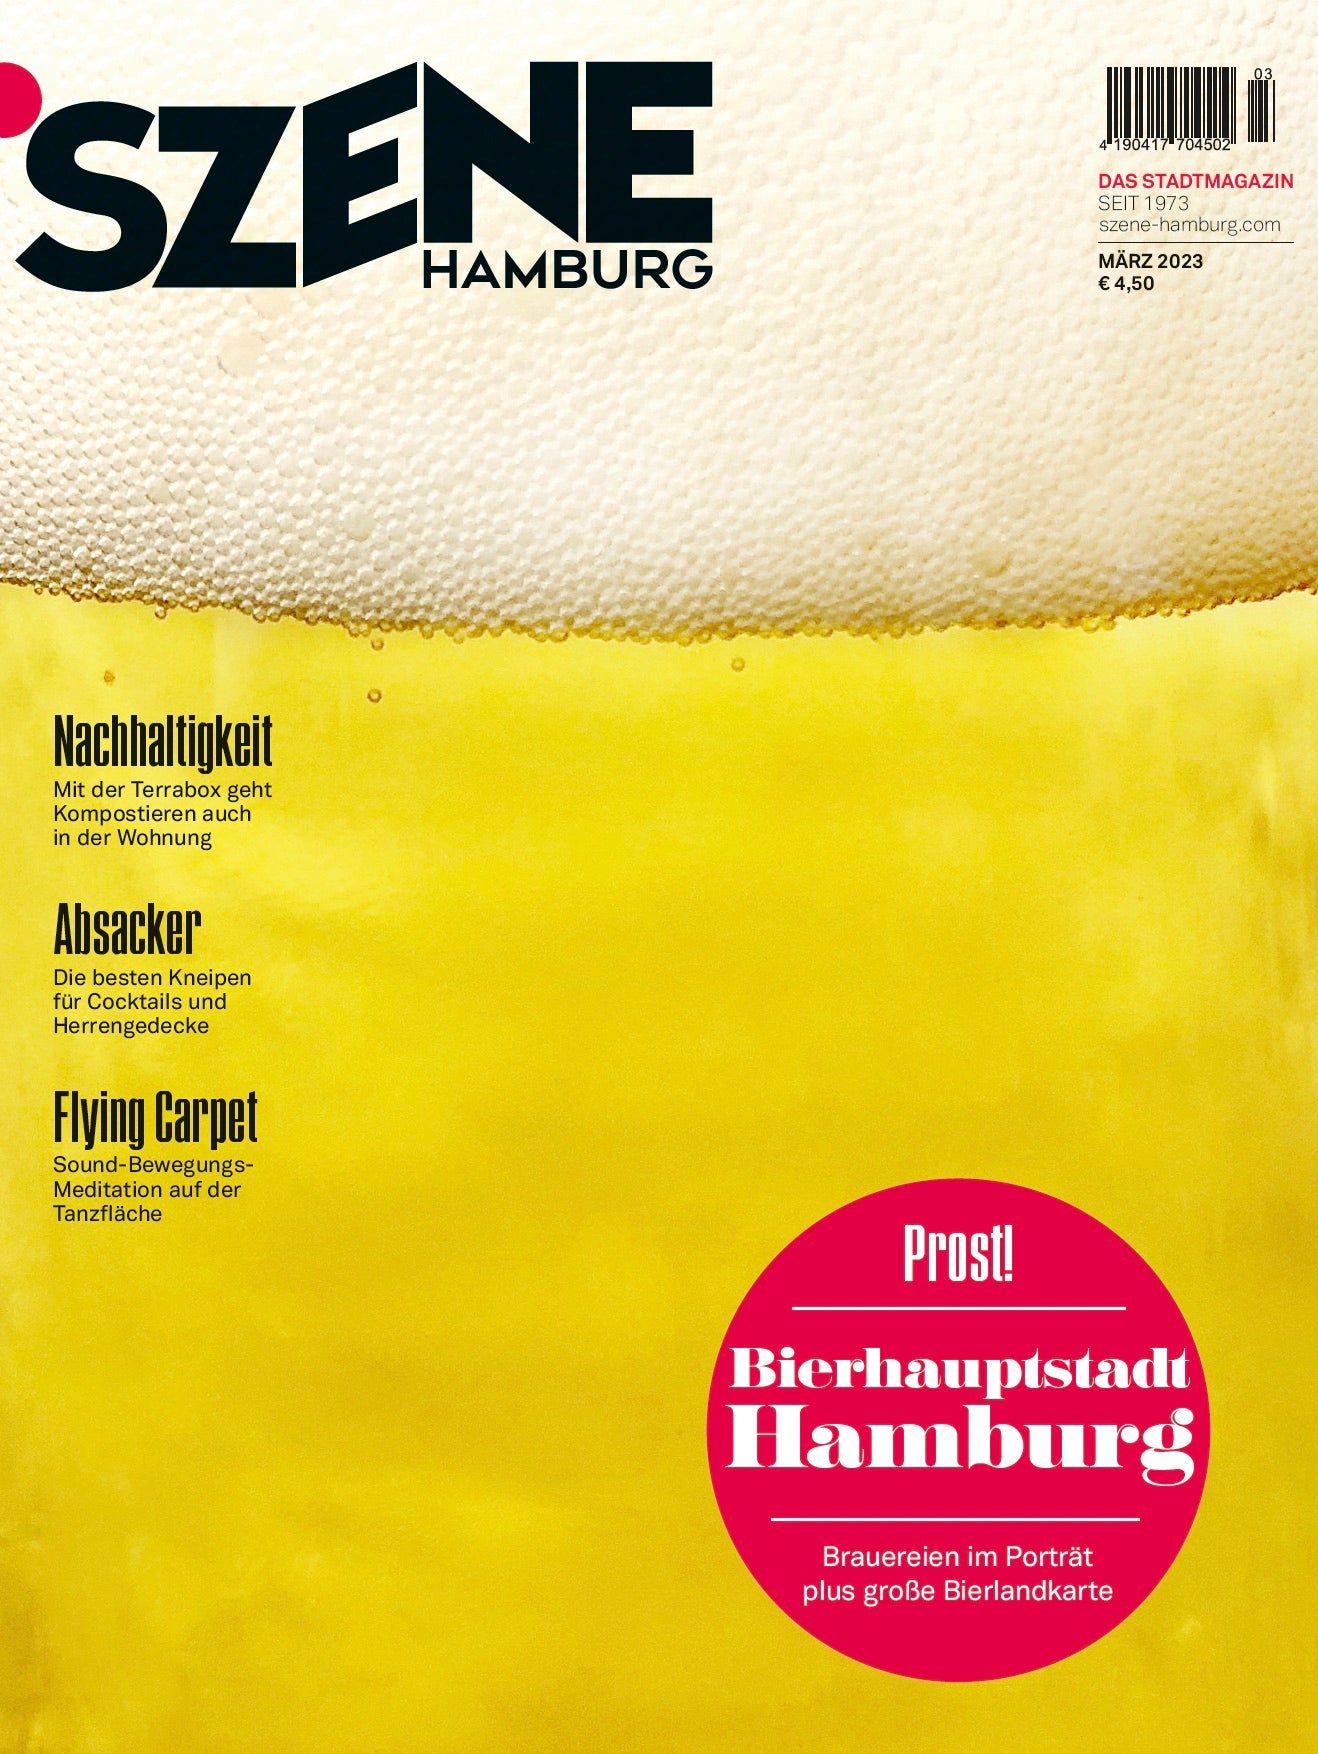 SZENE HAMBURG 03/2023 „Bierhauptstadt Hamburg“ - SZENE HAMBURG Shop